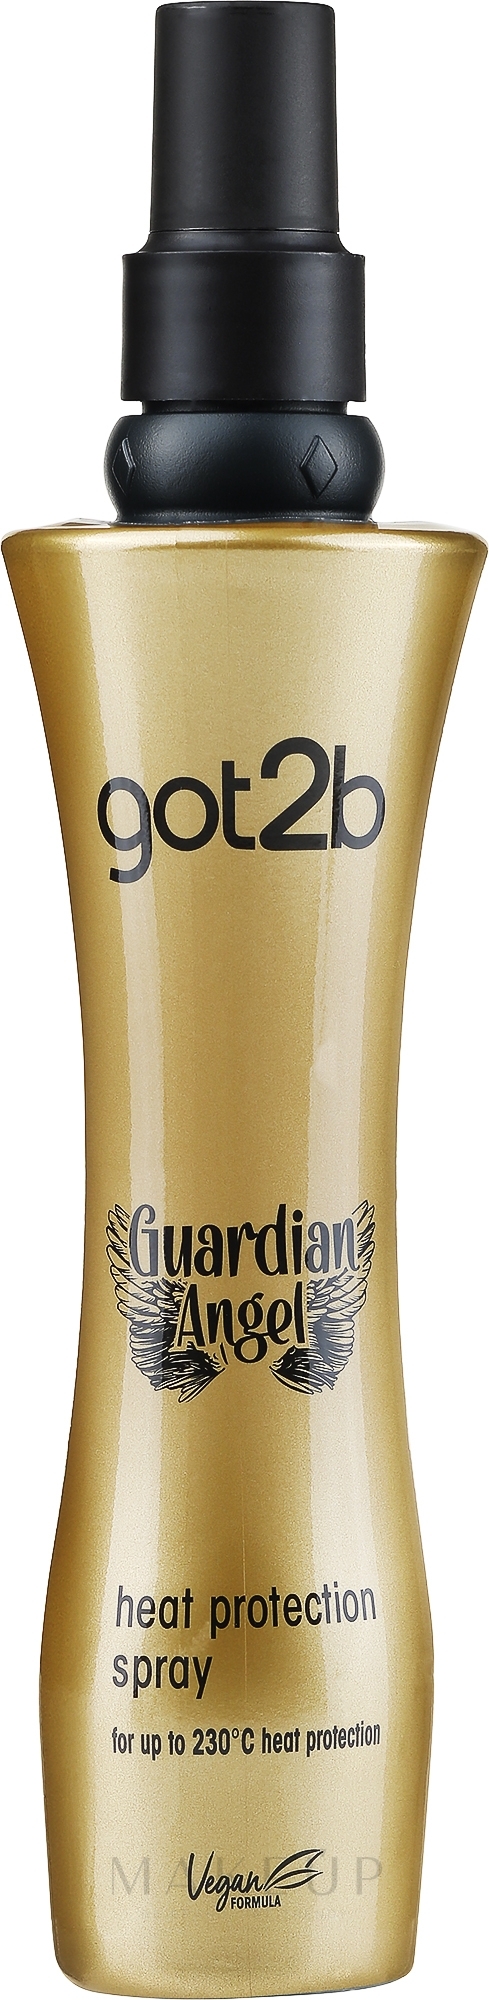 Wärmeschutz Haarspray - Schwarzkopf Got2b Guardian Angel Heat Protection Spray — Foto 200 ml